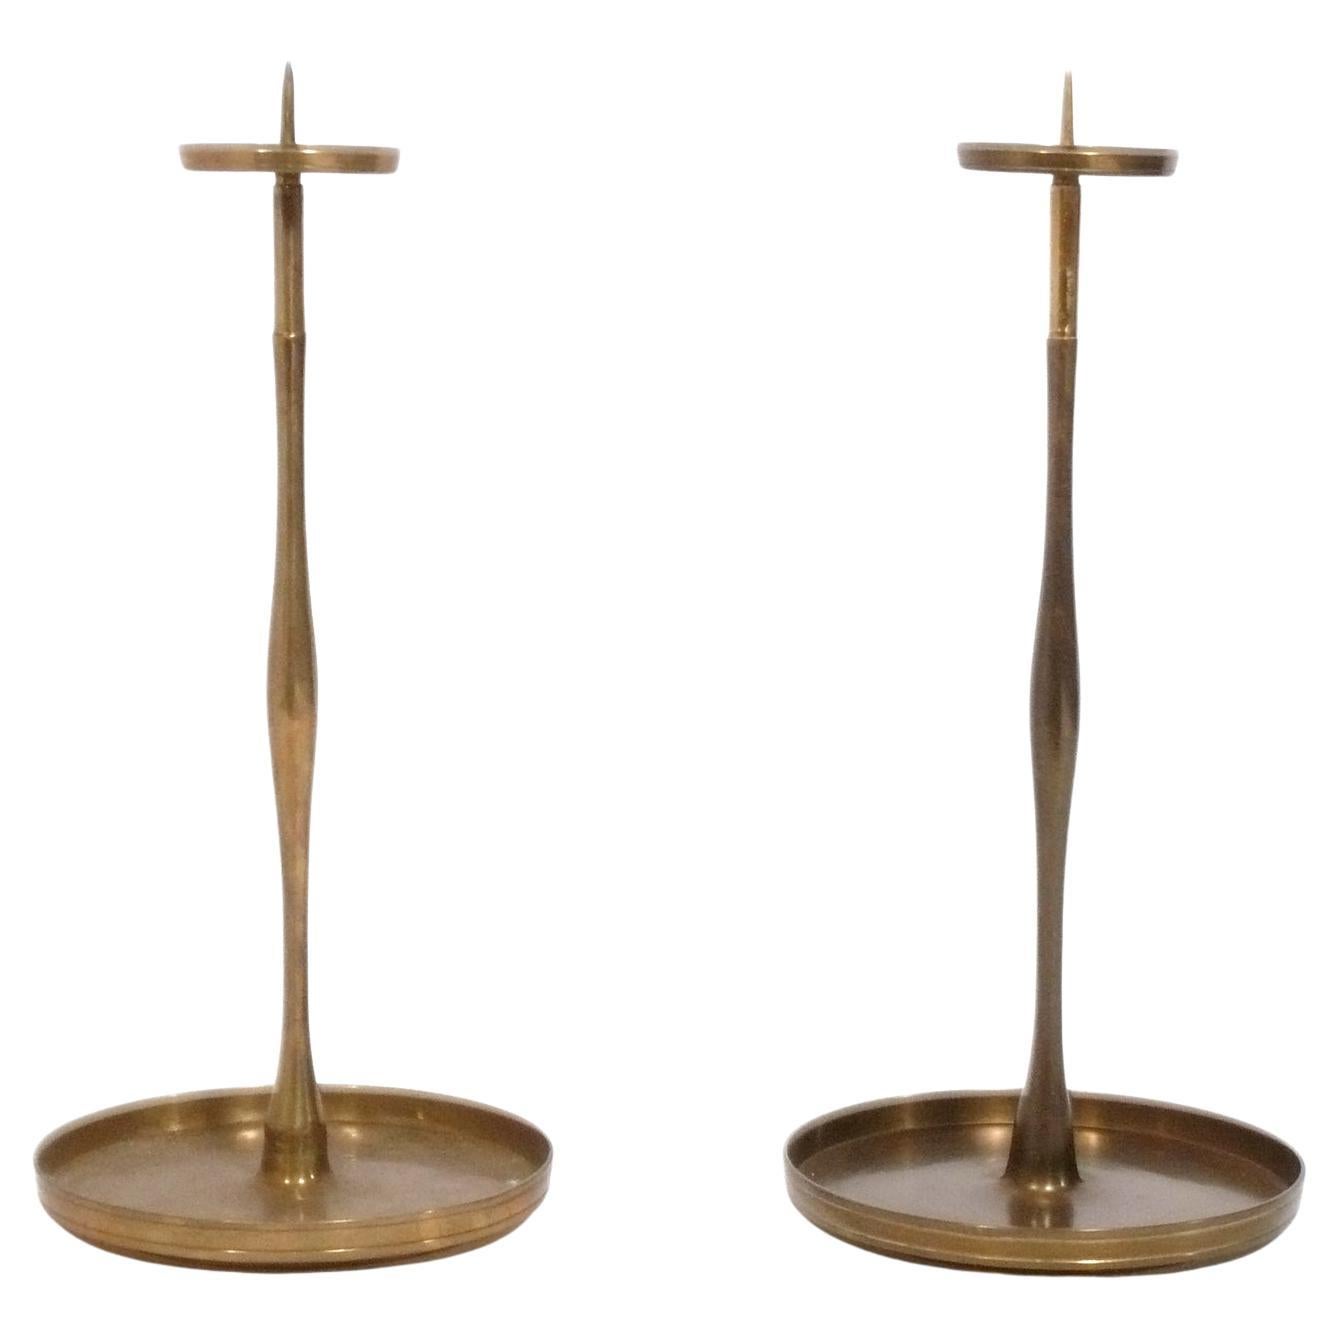 Nelson Rockefeller Collection Asian Inspired Brass Candlesticks For Sale